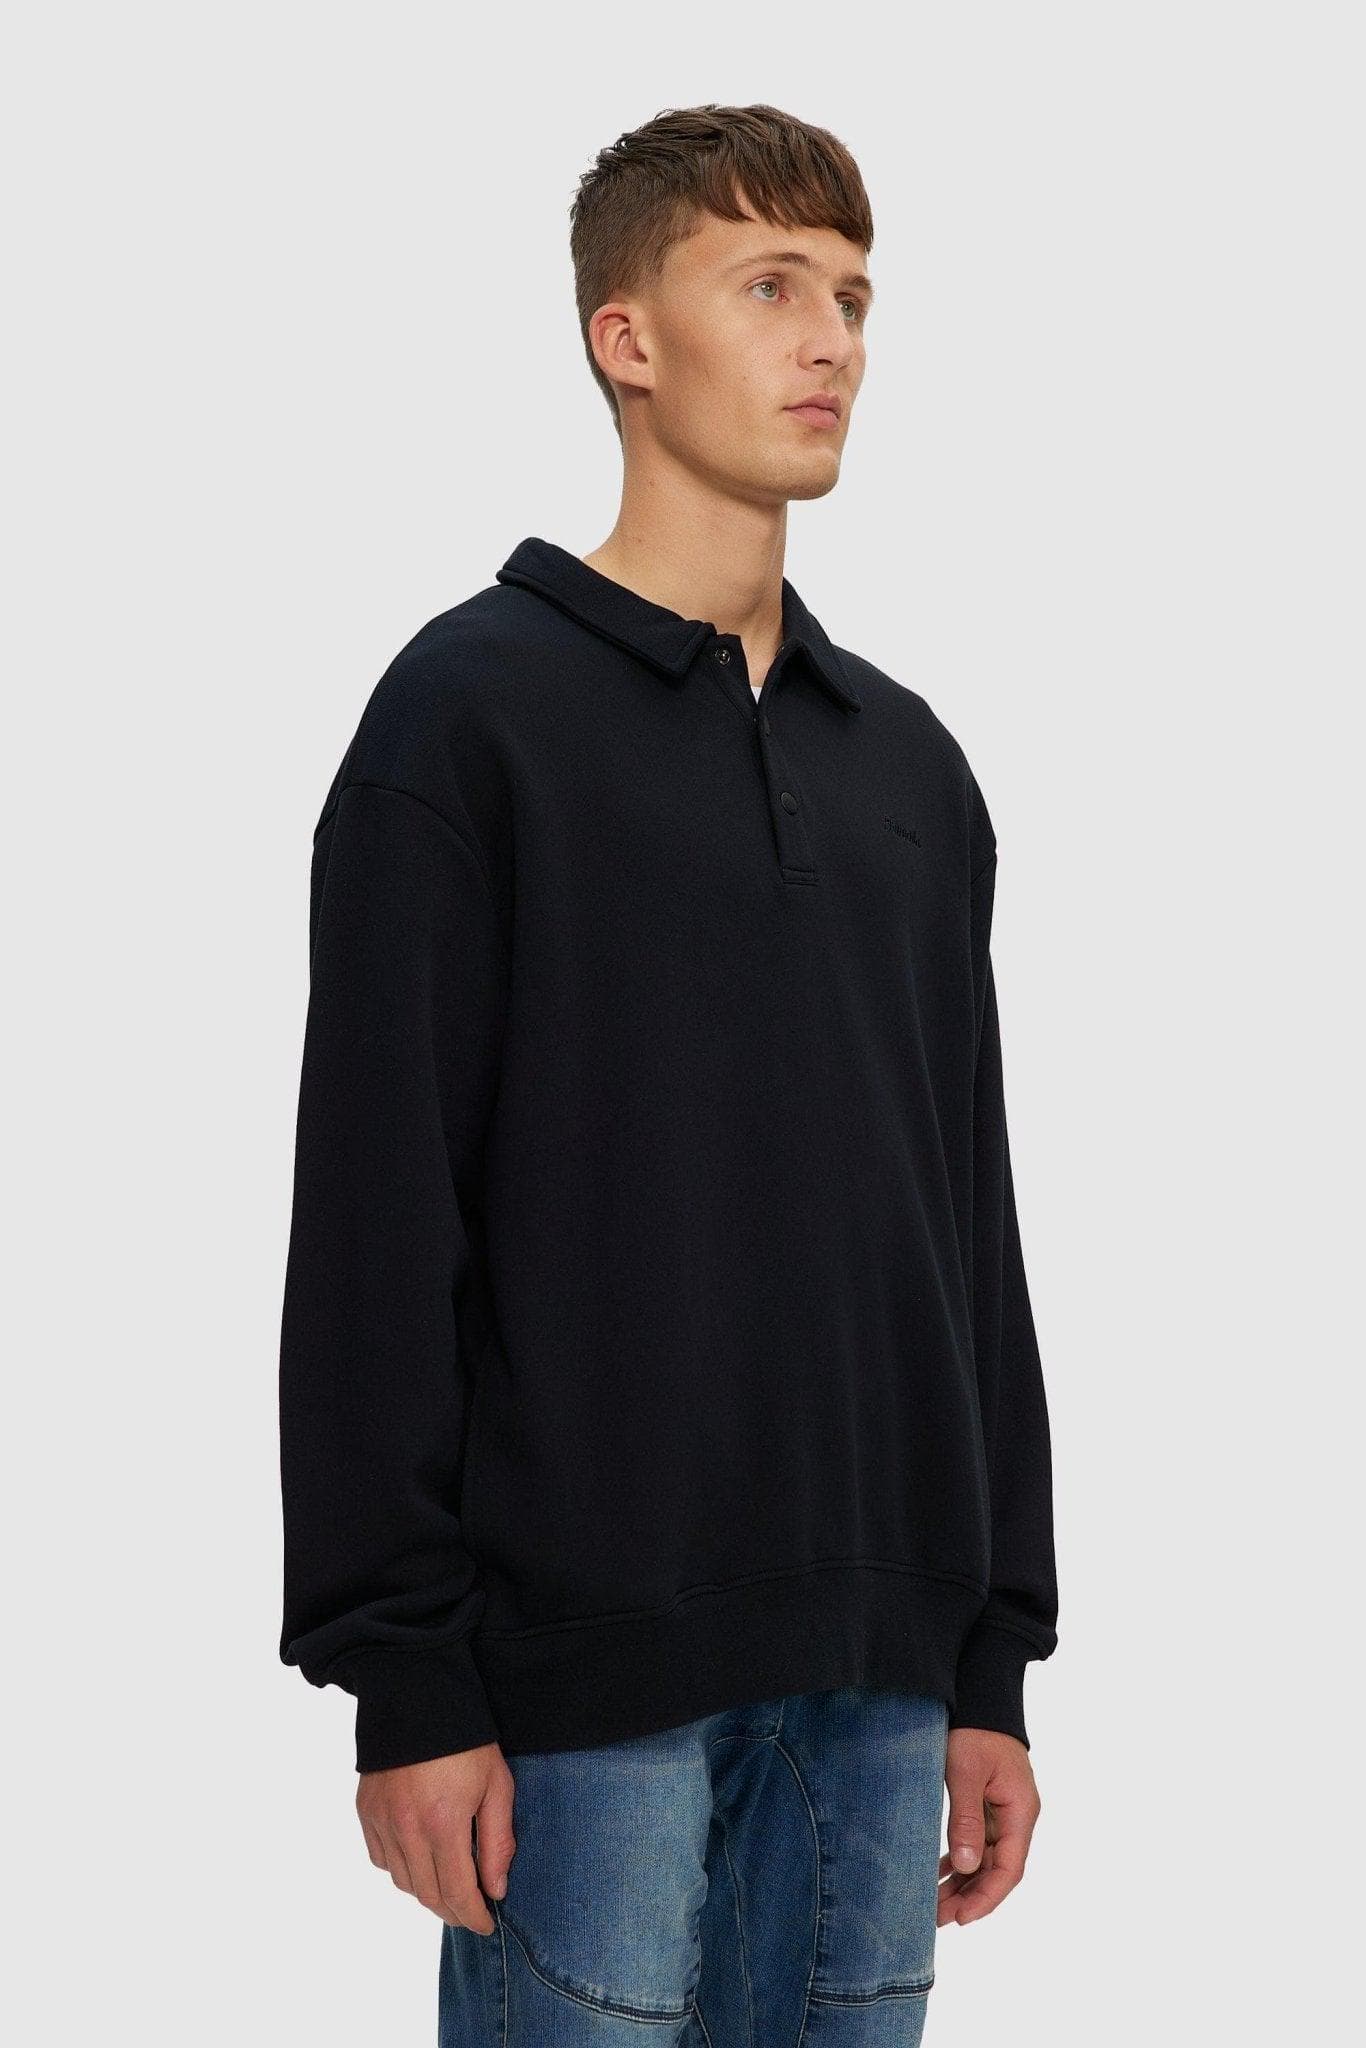 Collared Sweatshirt